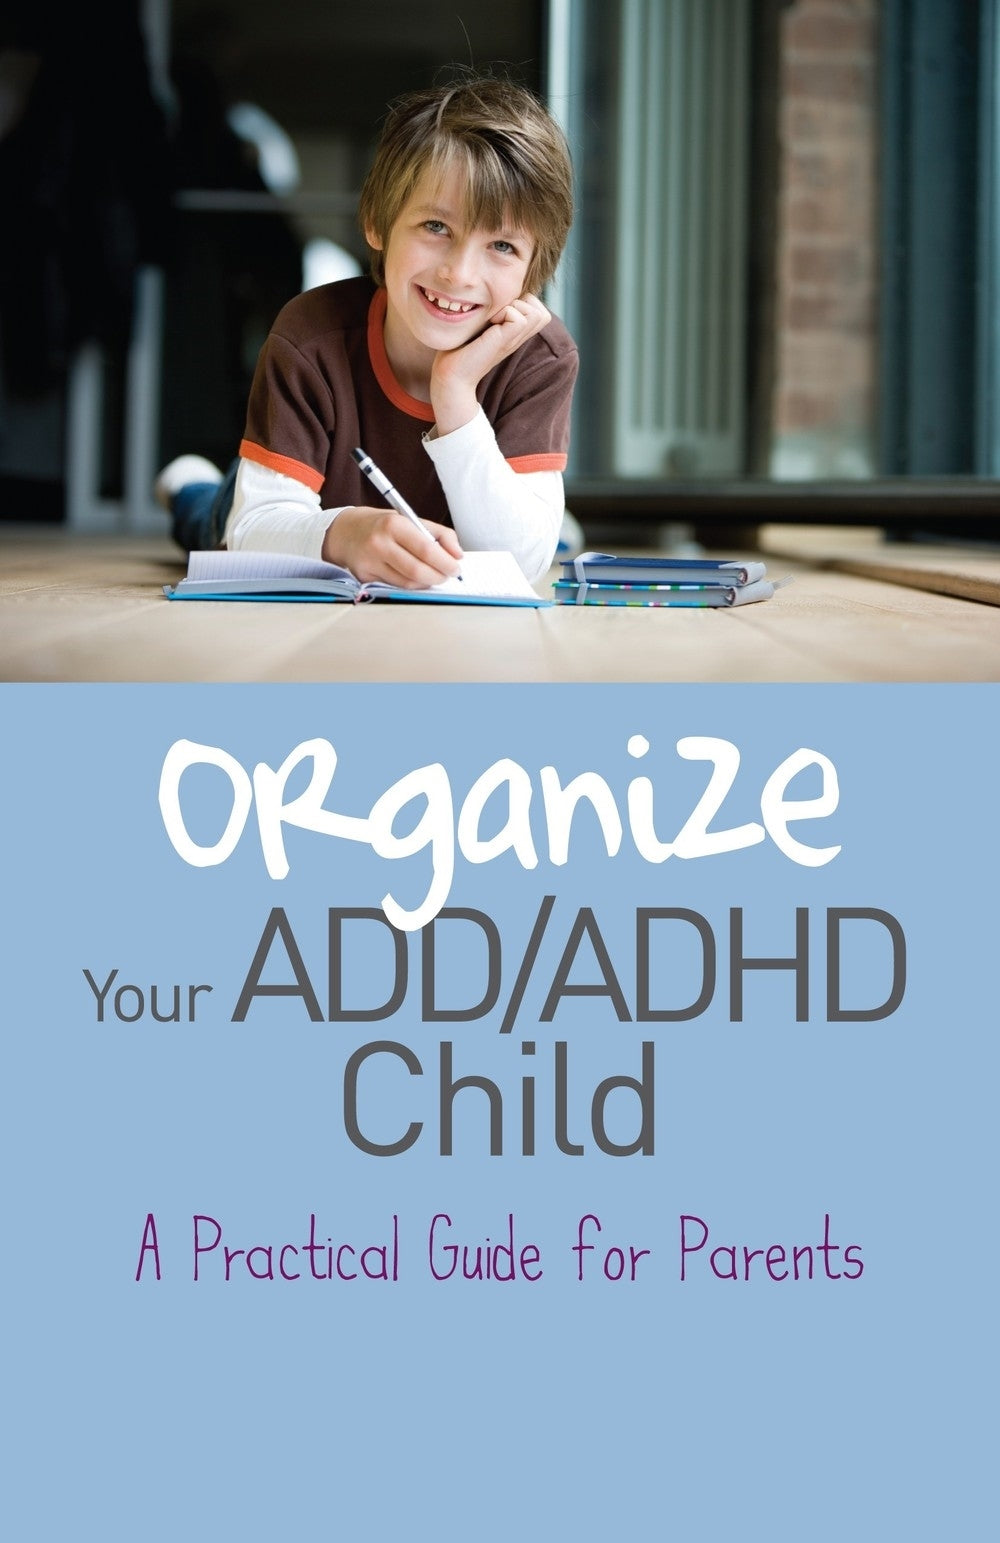 Organize Your ADD/ADHD Child by Cheryl Carter